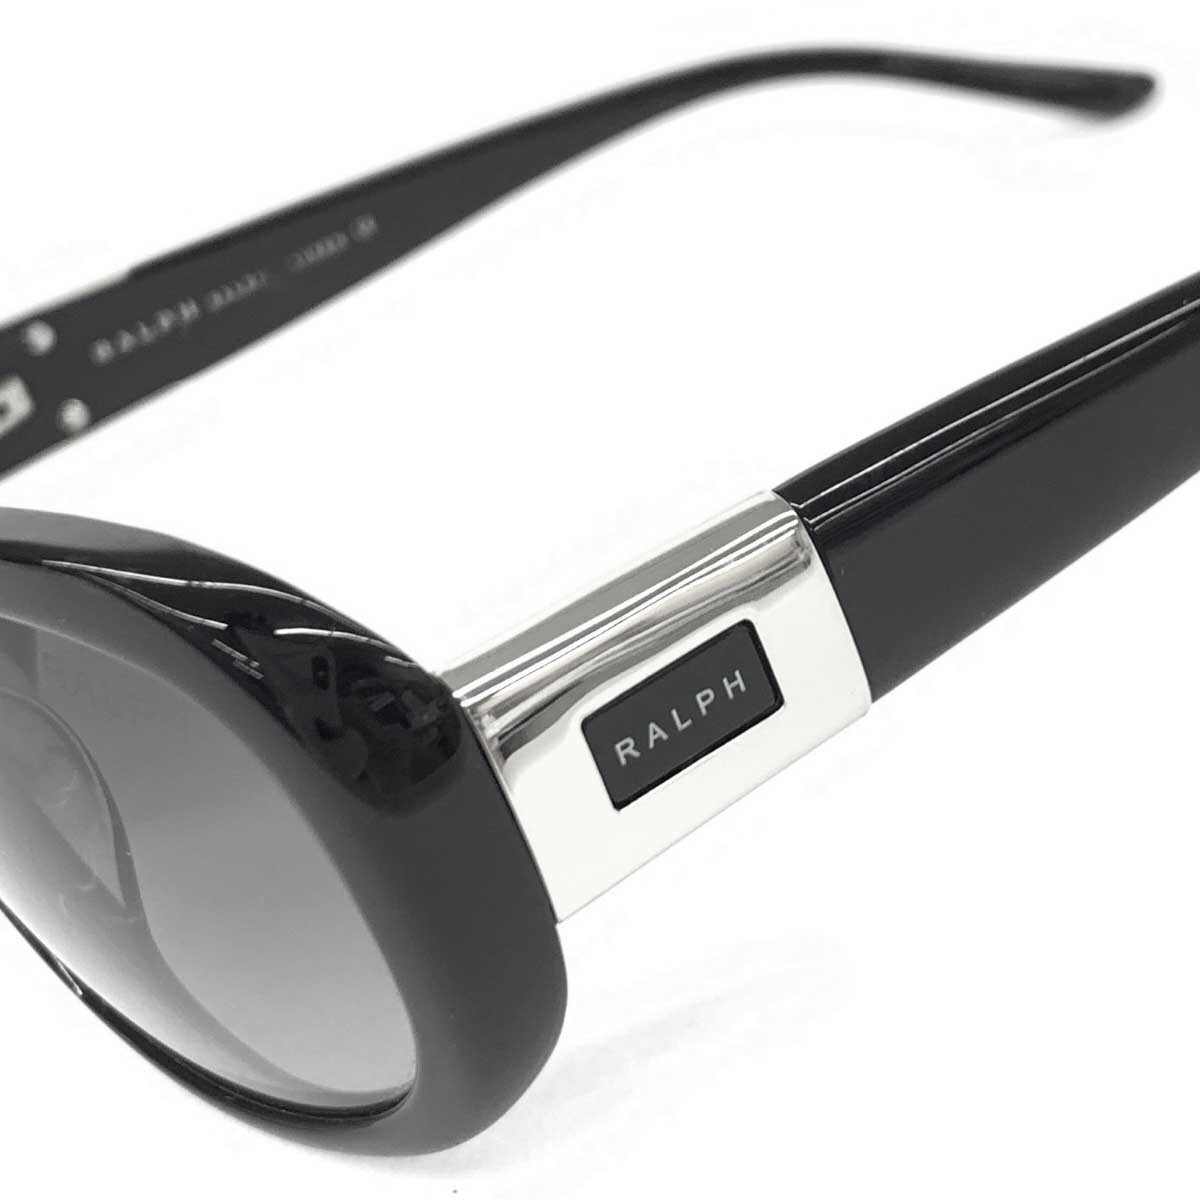 *RALPH LAUREN Ralph Lauren sunglasses *RA5081 black gradation lady's 58*15 135 sunglasses clothing accessories 